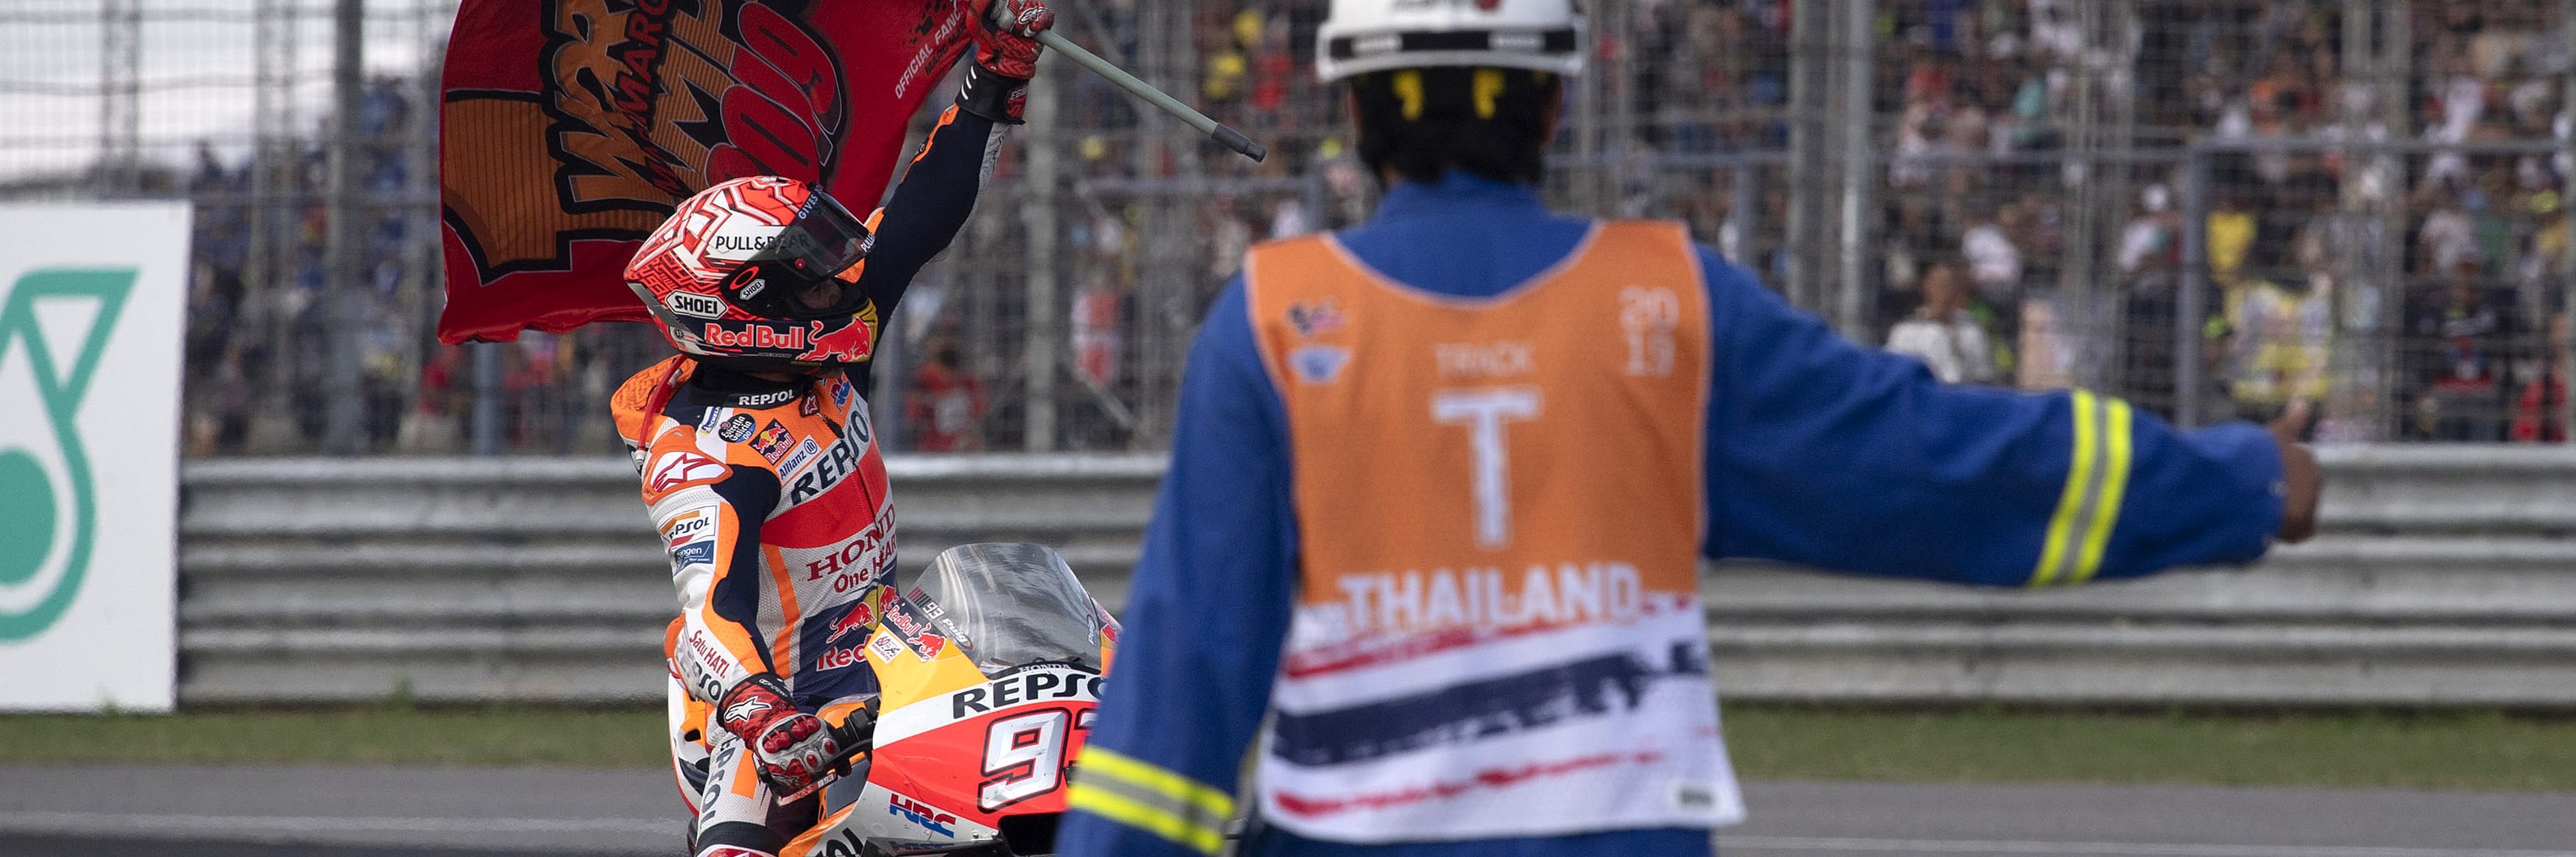 GP Giappone: Marc Marquez per infierire sui rivali